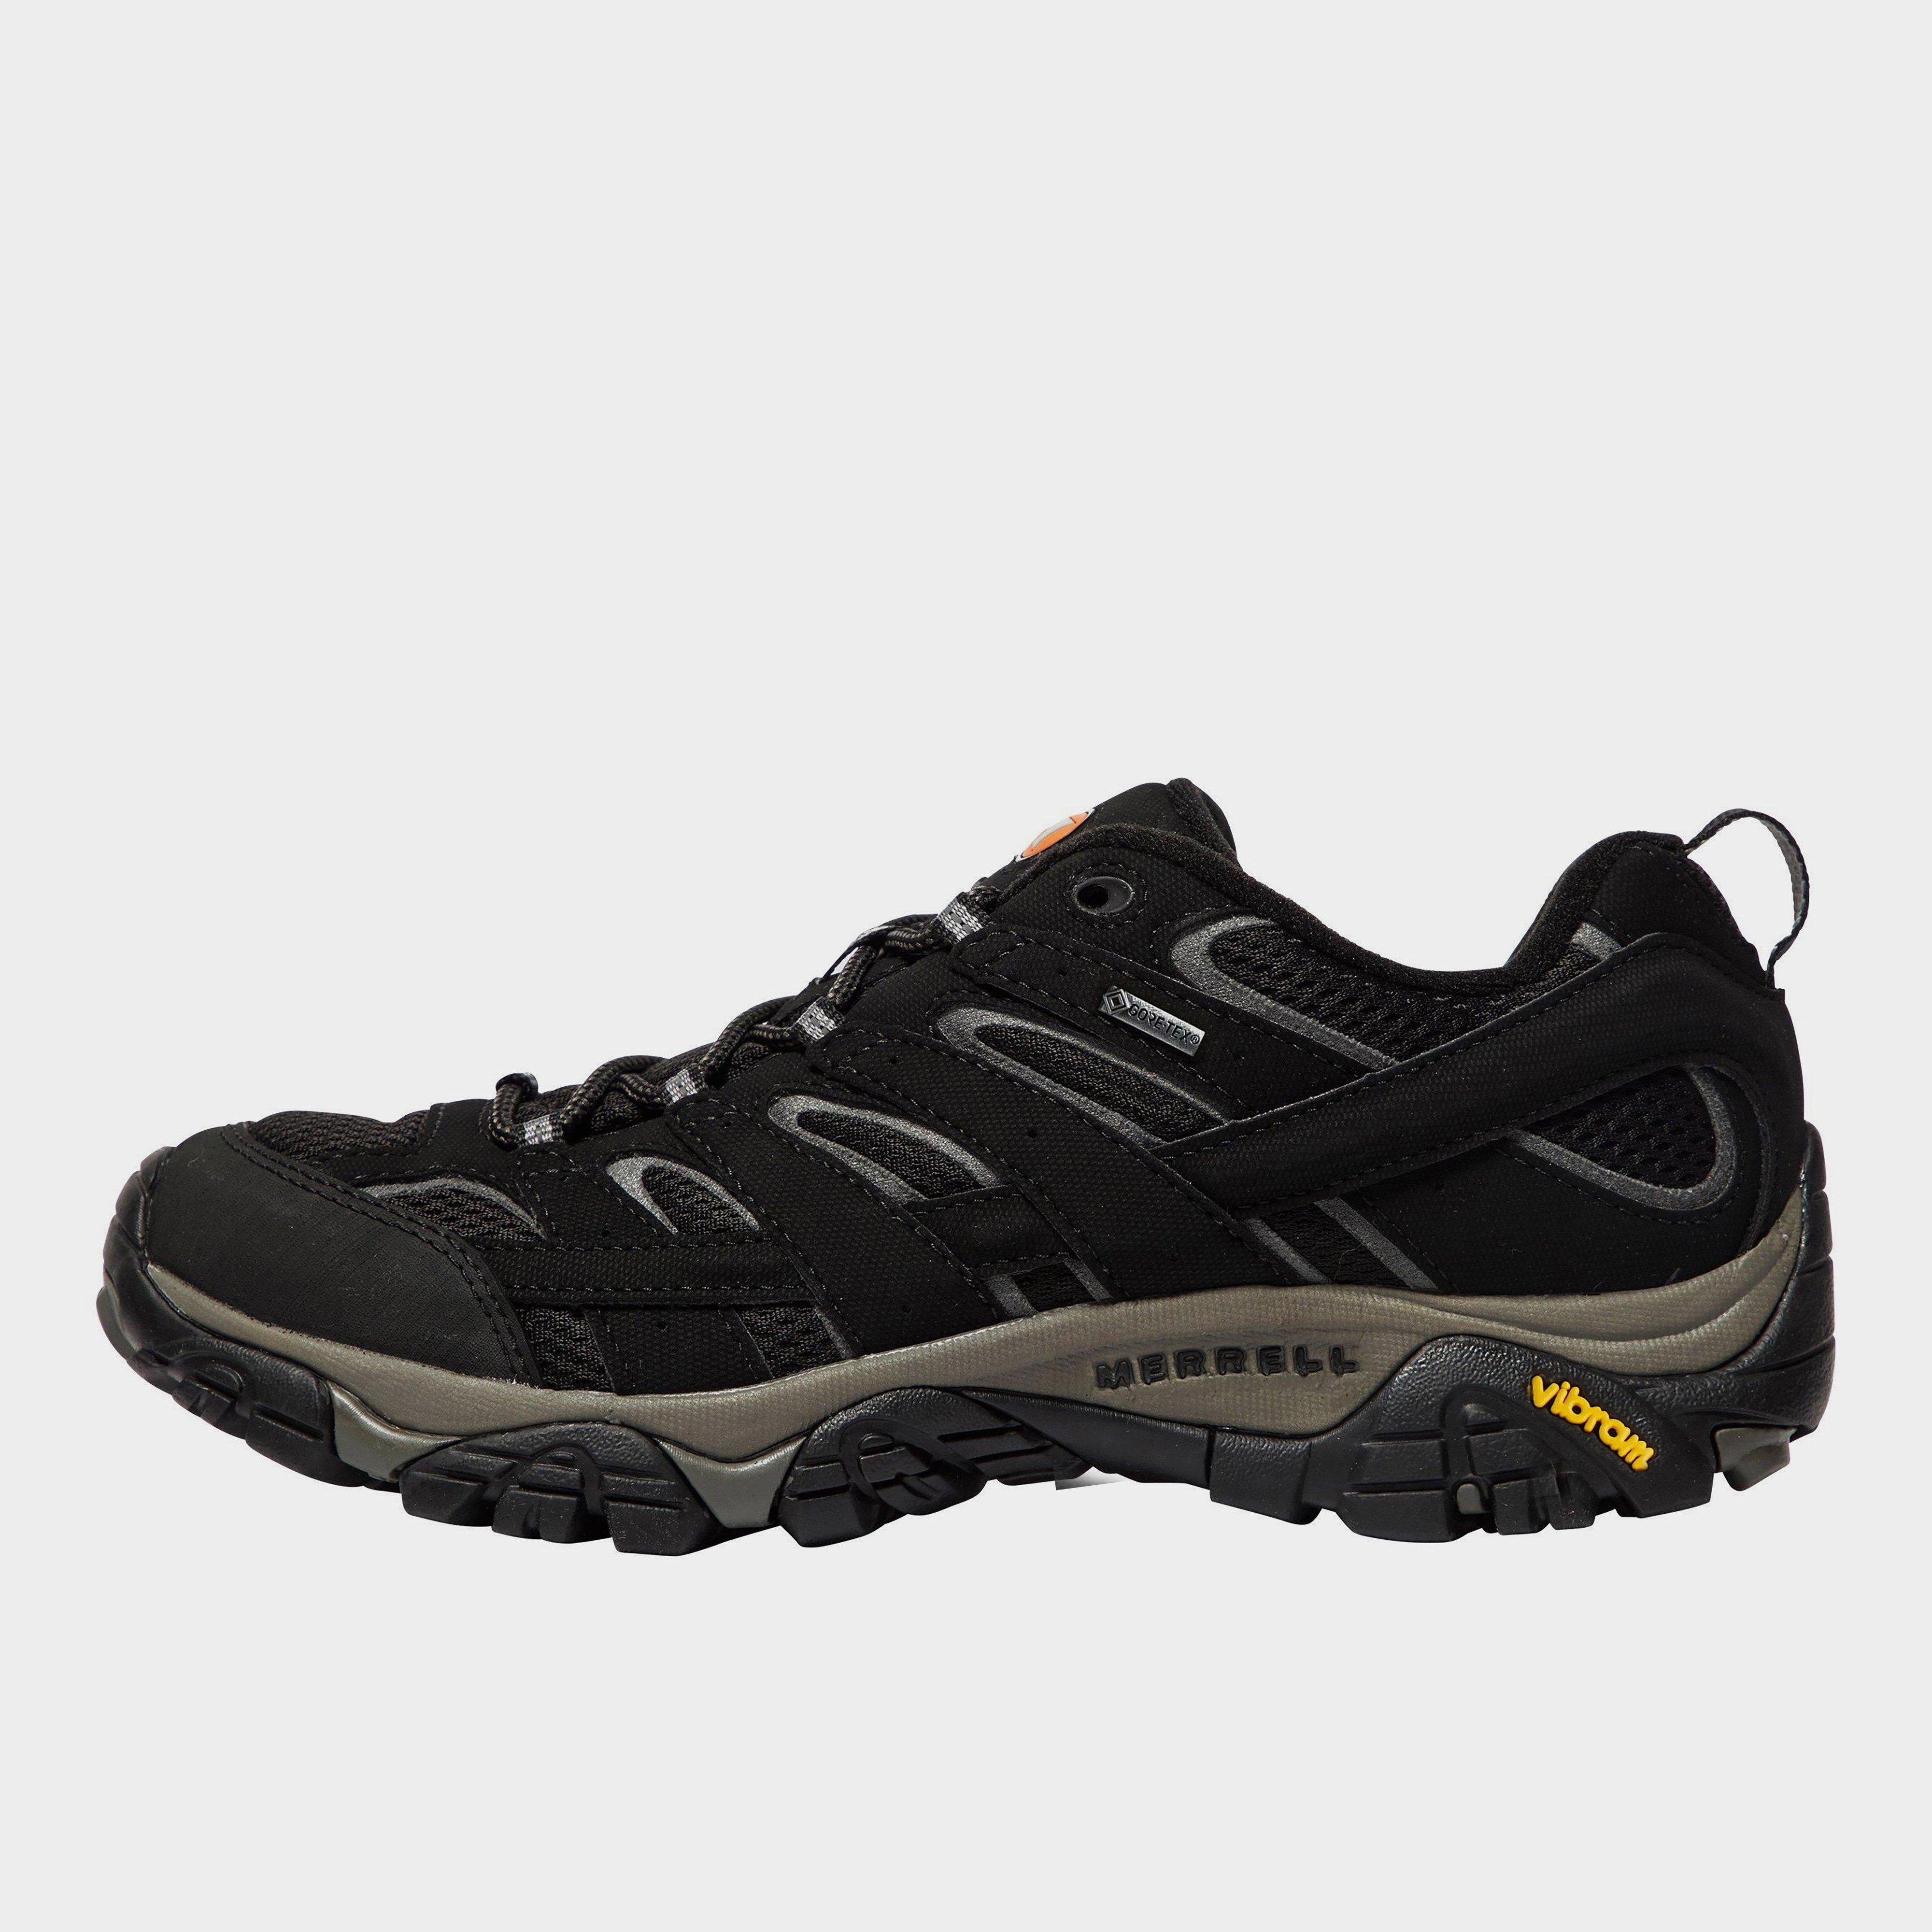 Merrell Mens Moab 2 Gore-tex  Hiking Shoes - Black  Black